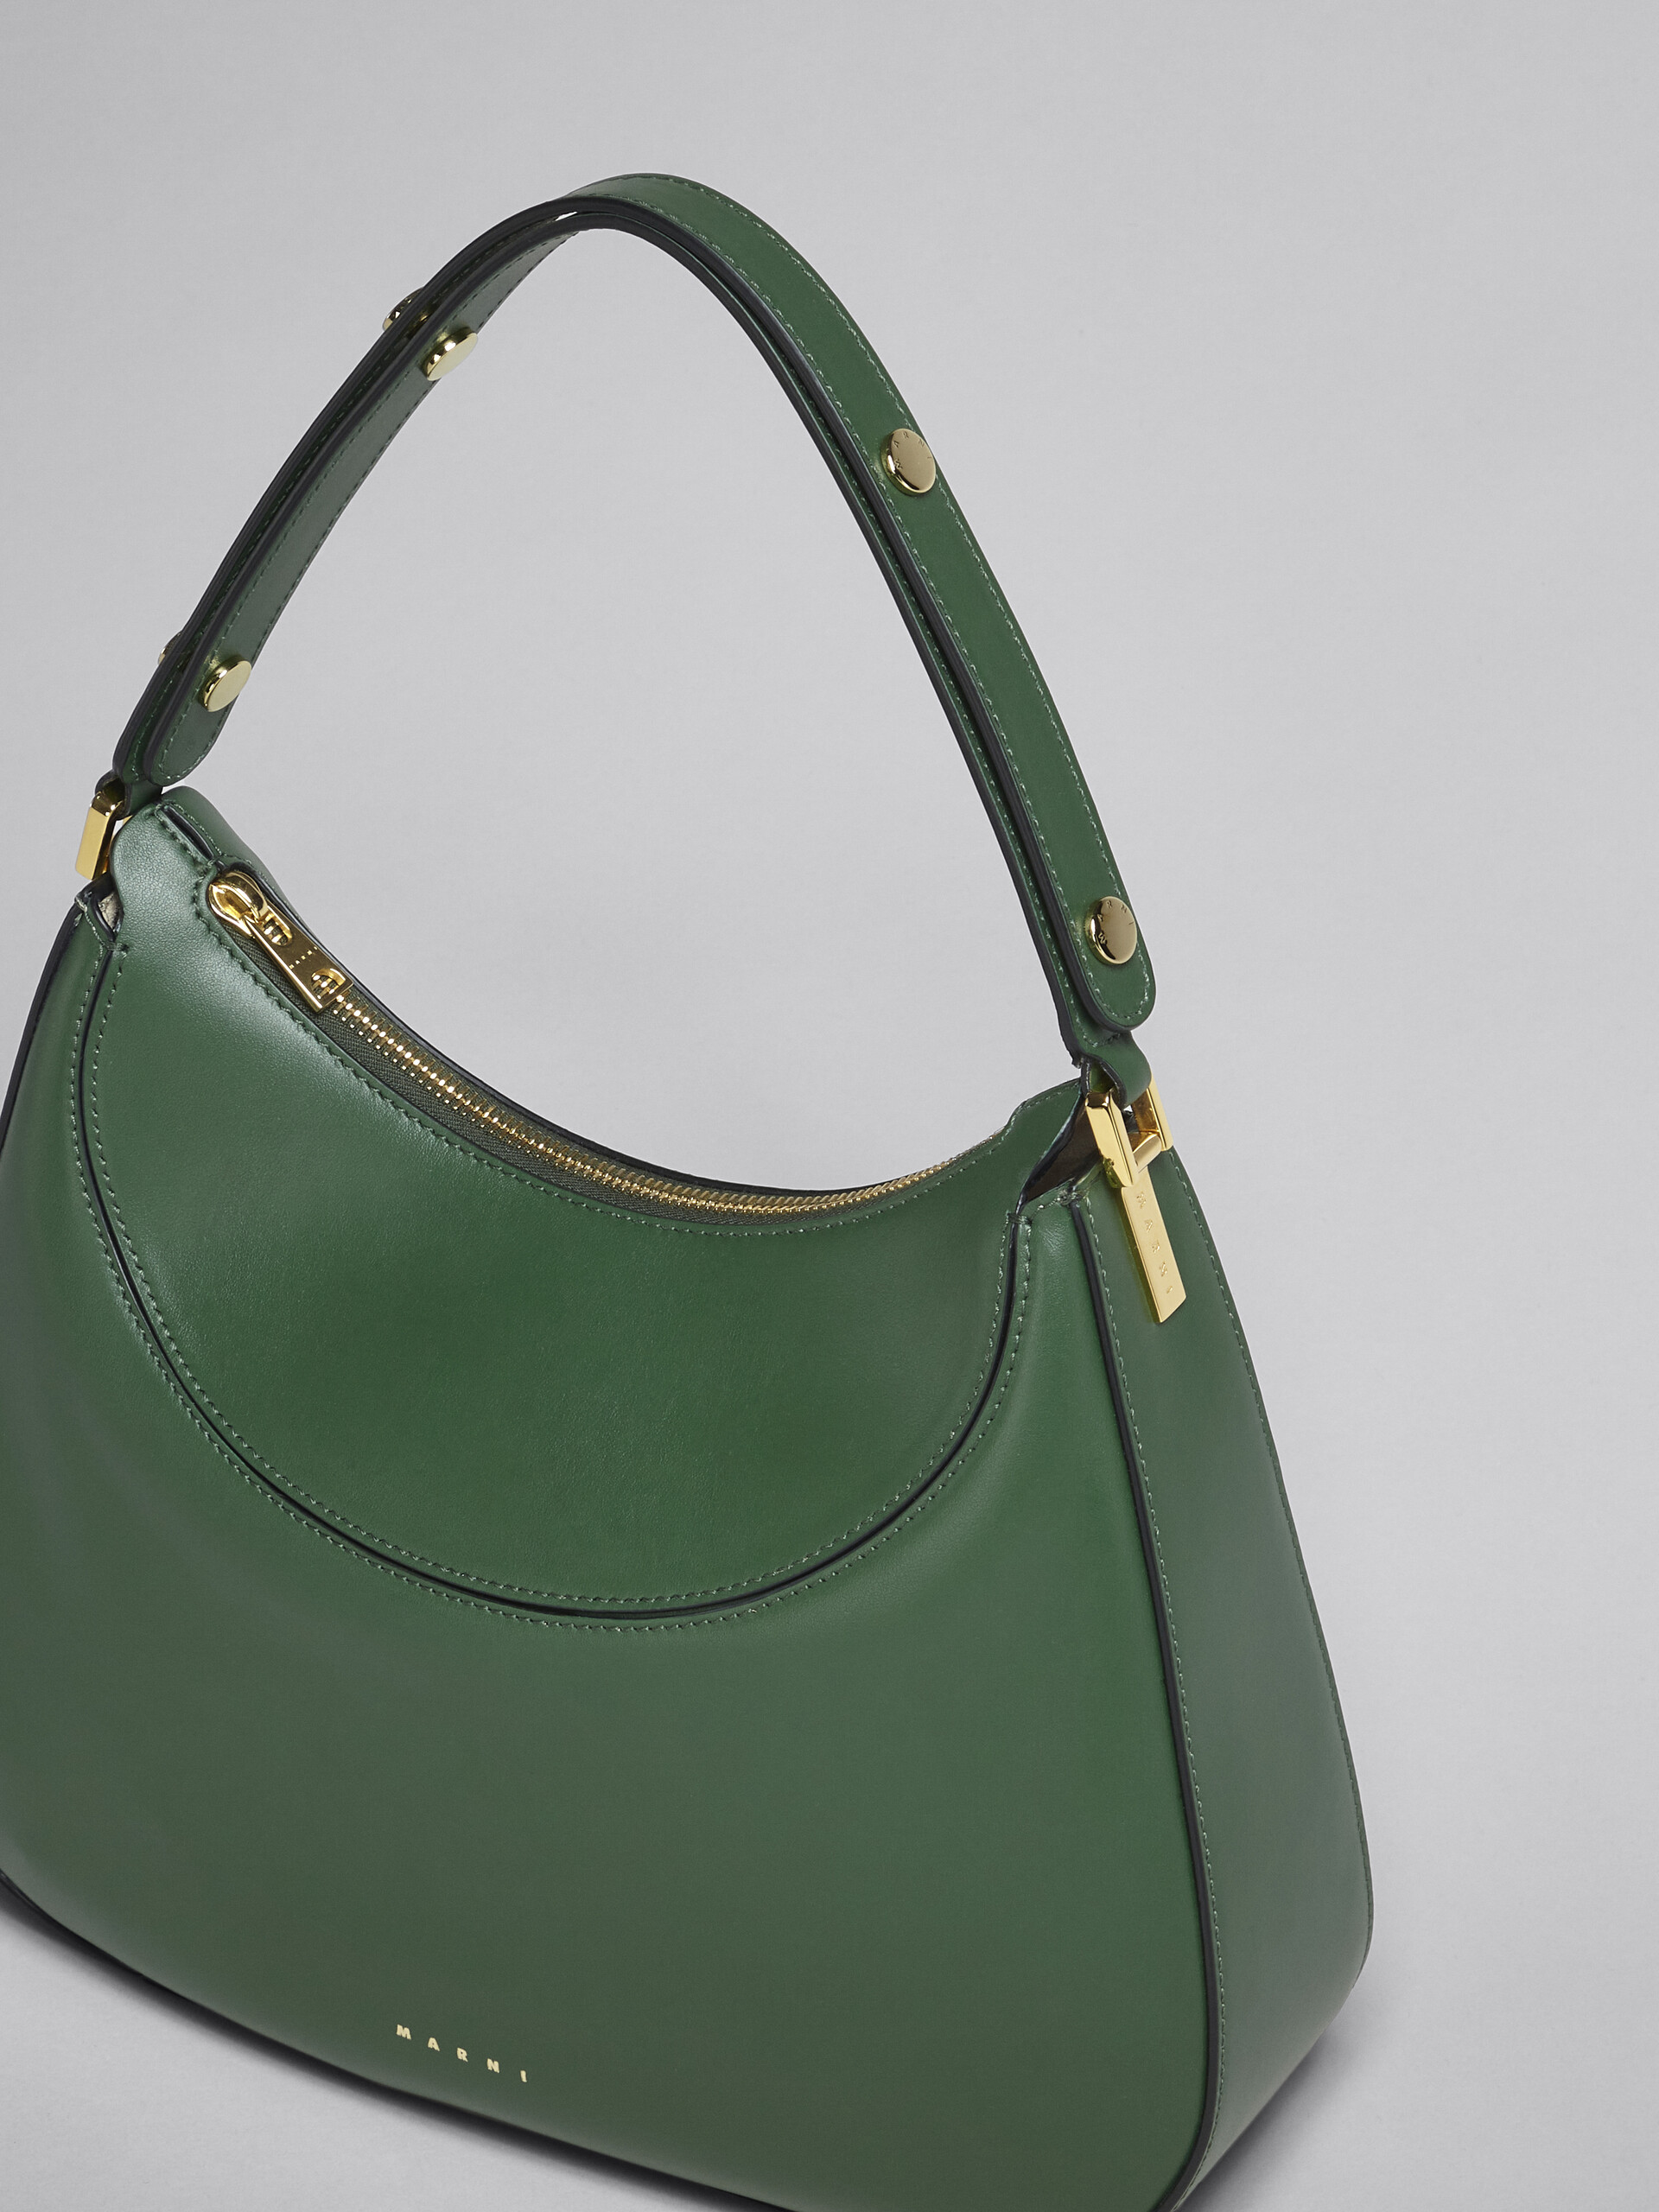 Milano bag grande in pelle verde - Borse a mano - Image 5